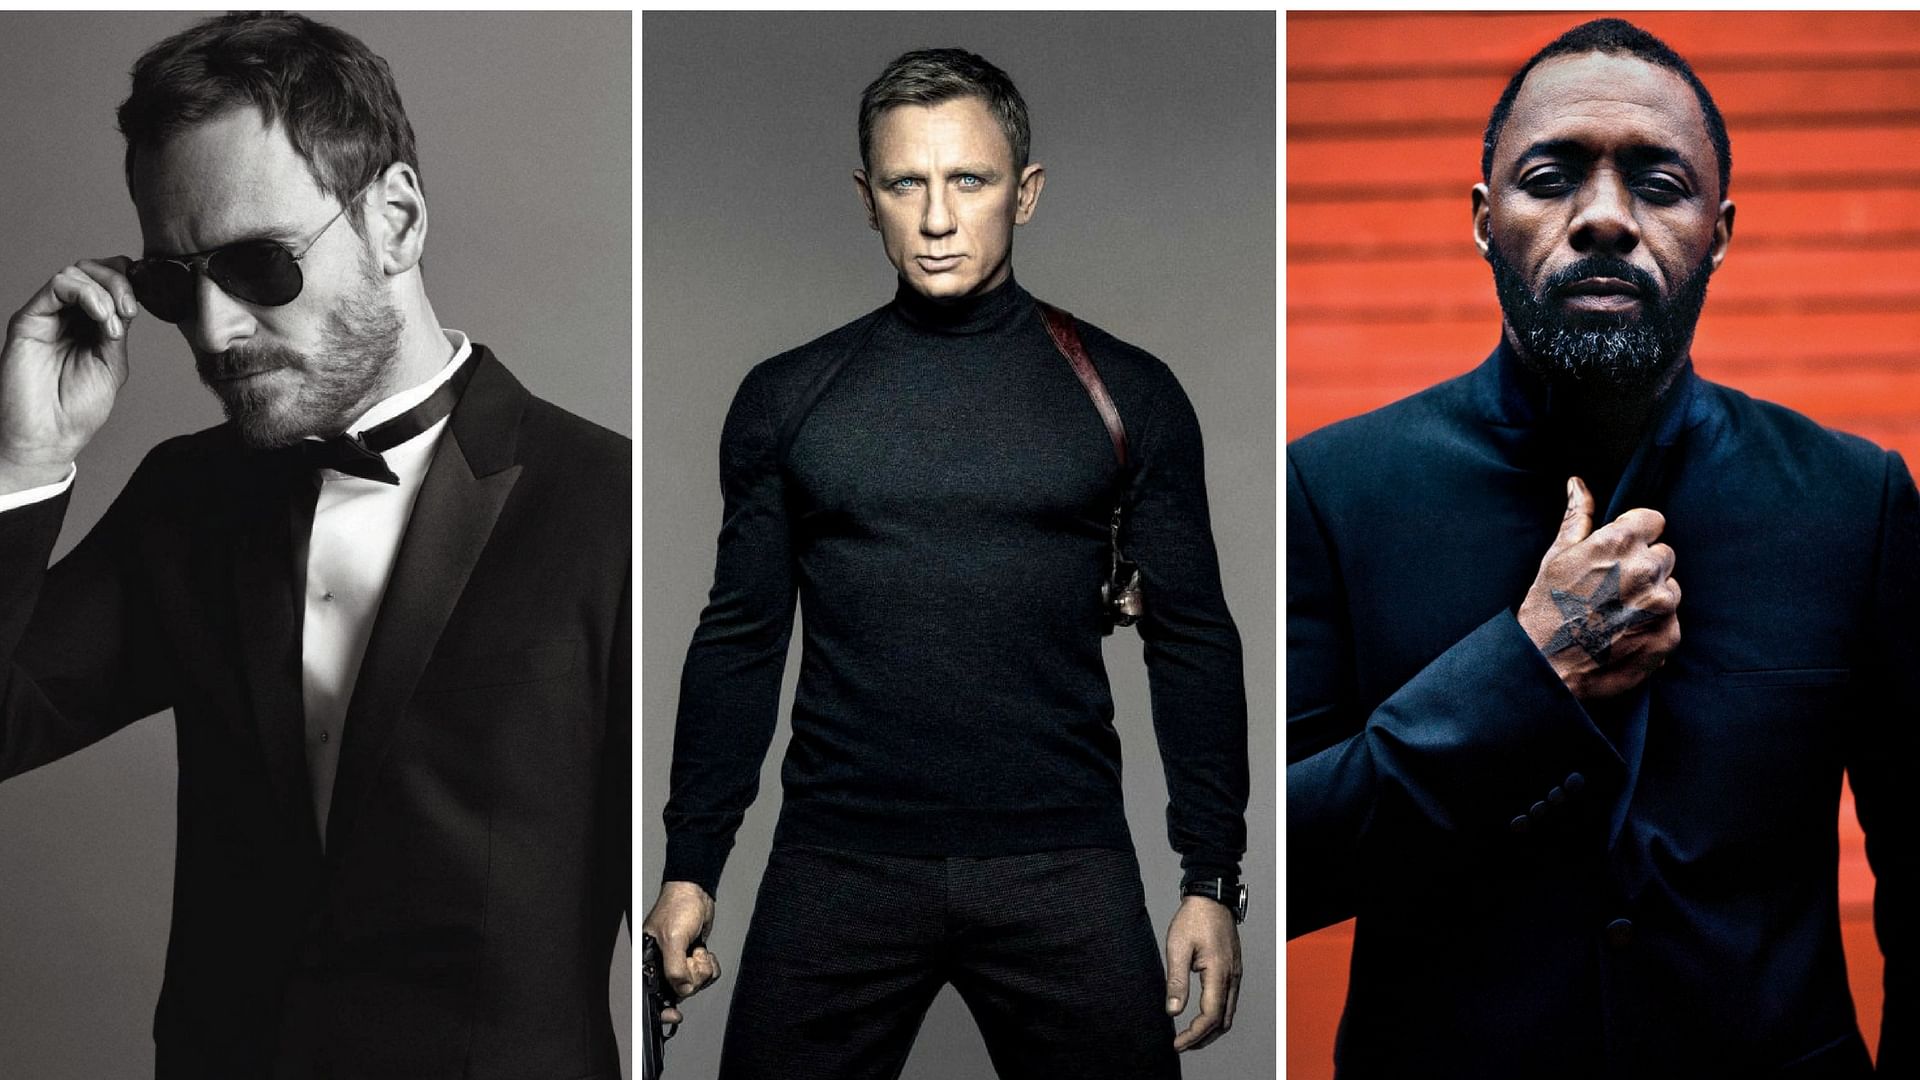 Michael Fassbender, Daniel Craig and Idris Elba - The Bond and the possible ‘Bonds’.